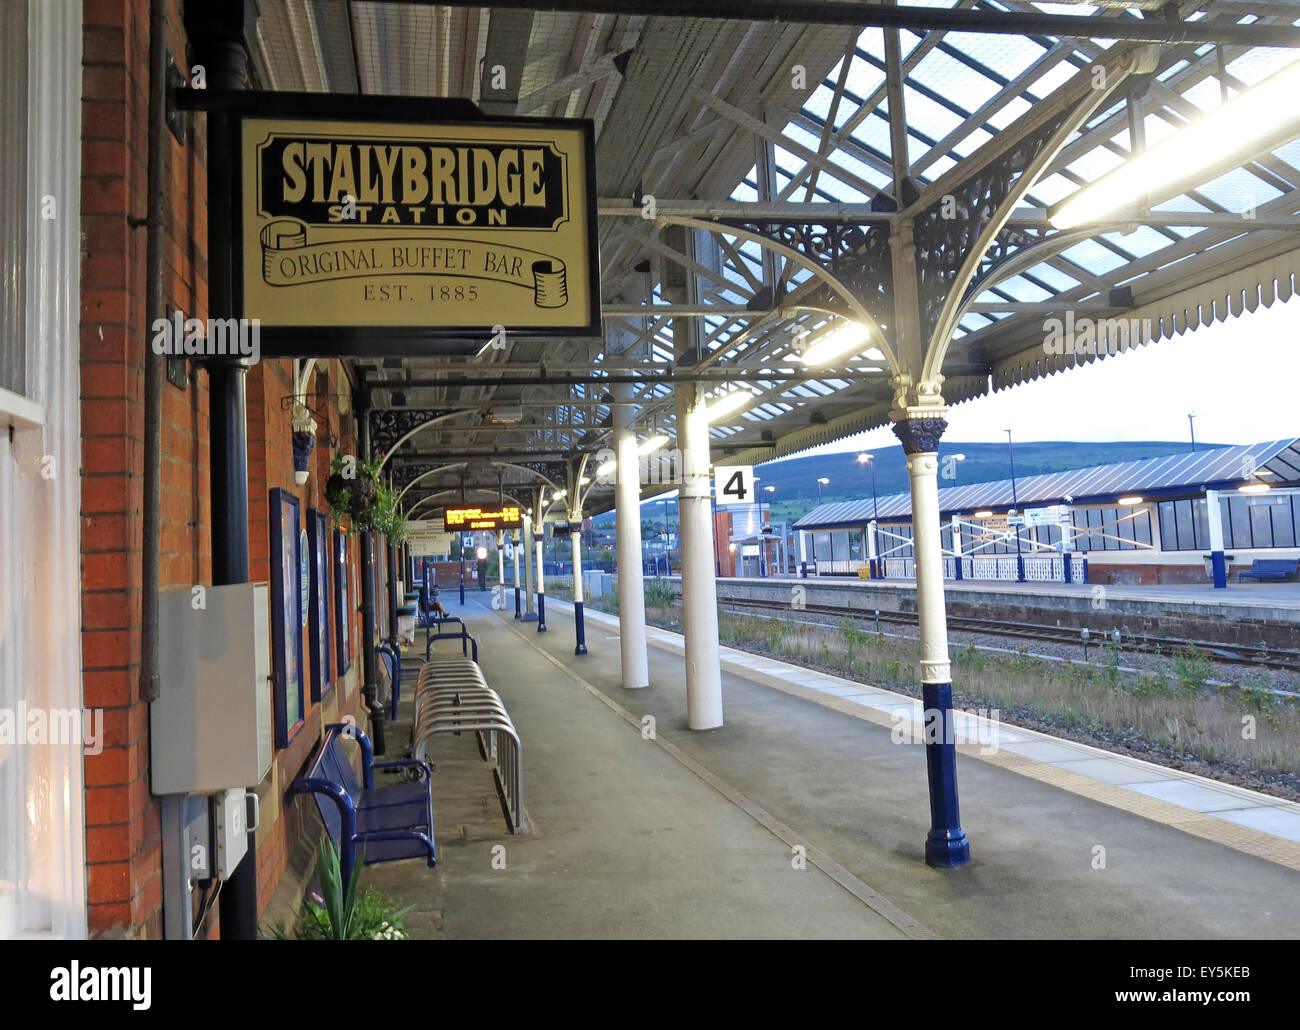 Stalybridge Station Original Buffet bar,est 1885, Transpennine aletrail, Tameside, Greater Manchester, England, UK Stock Photo